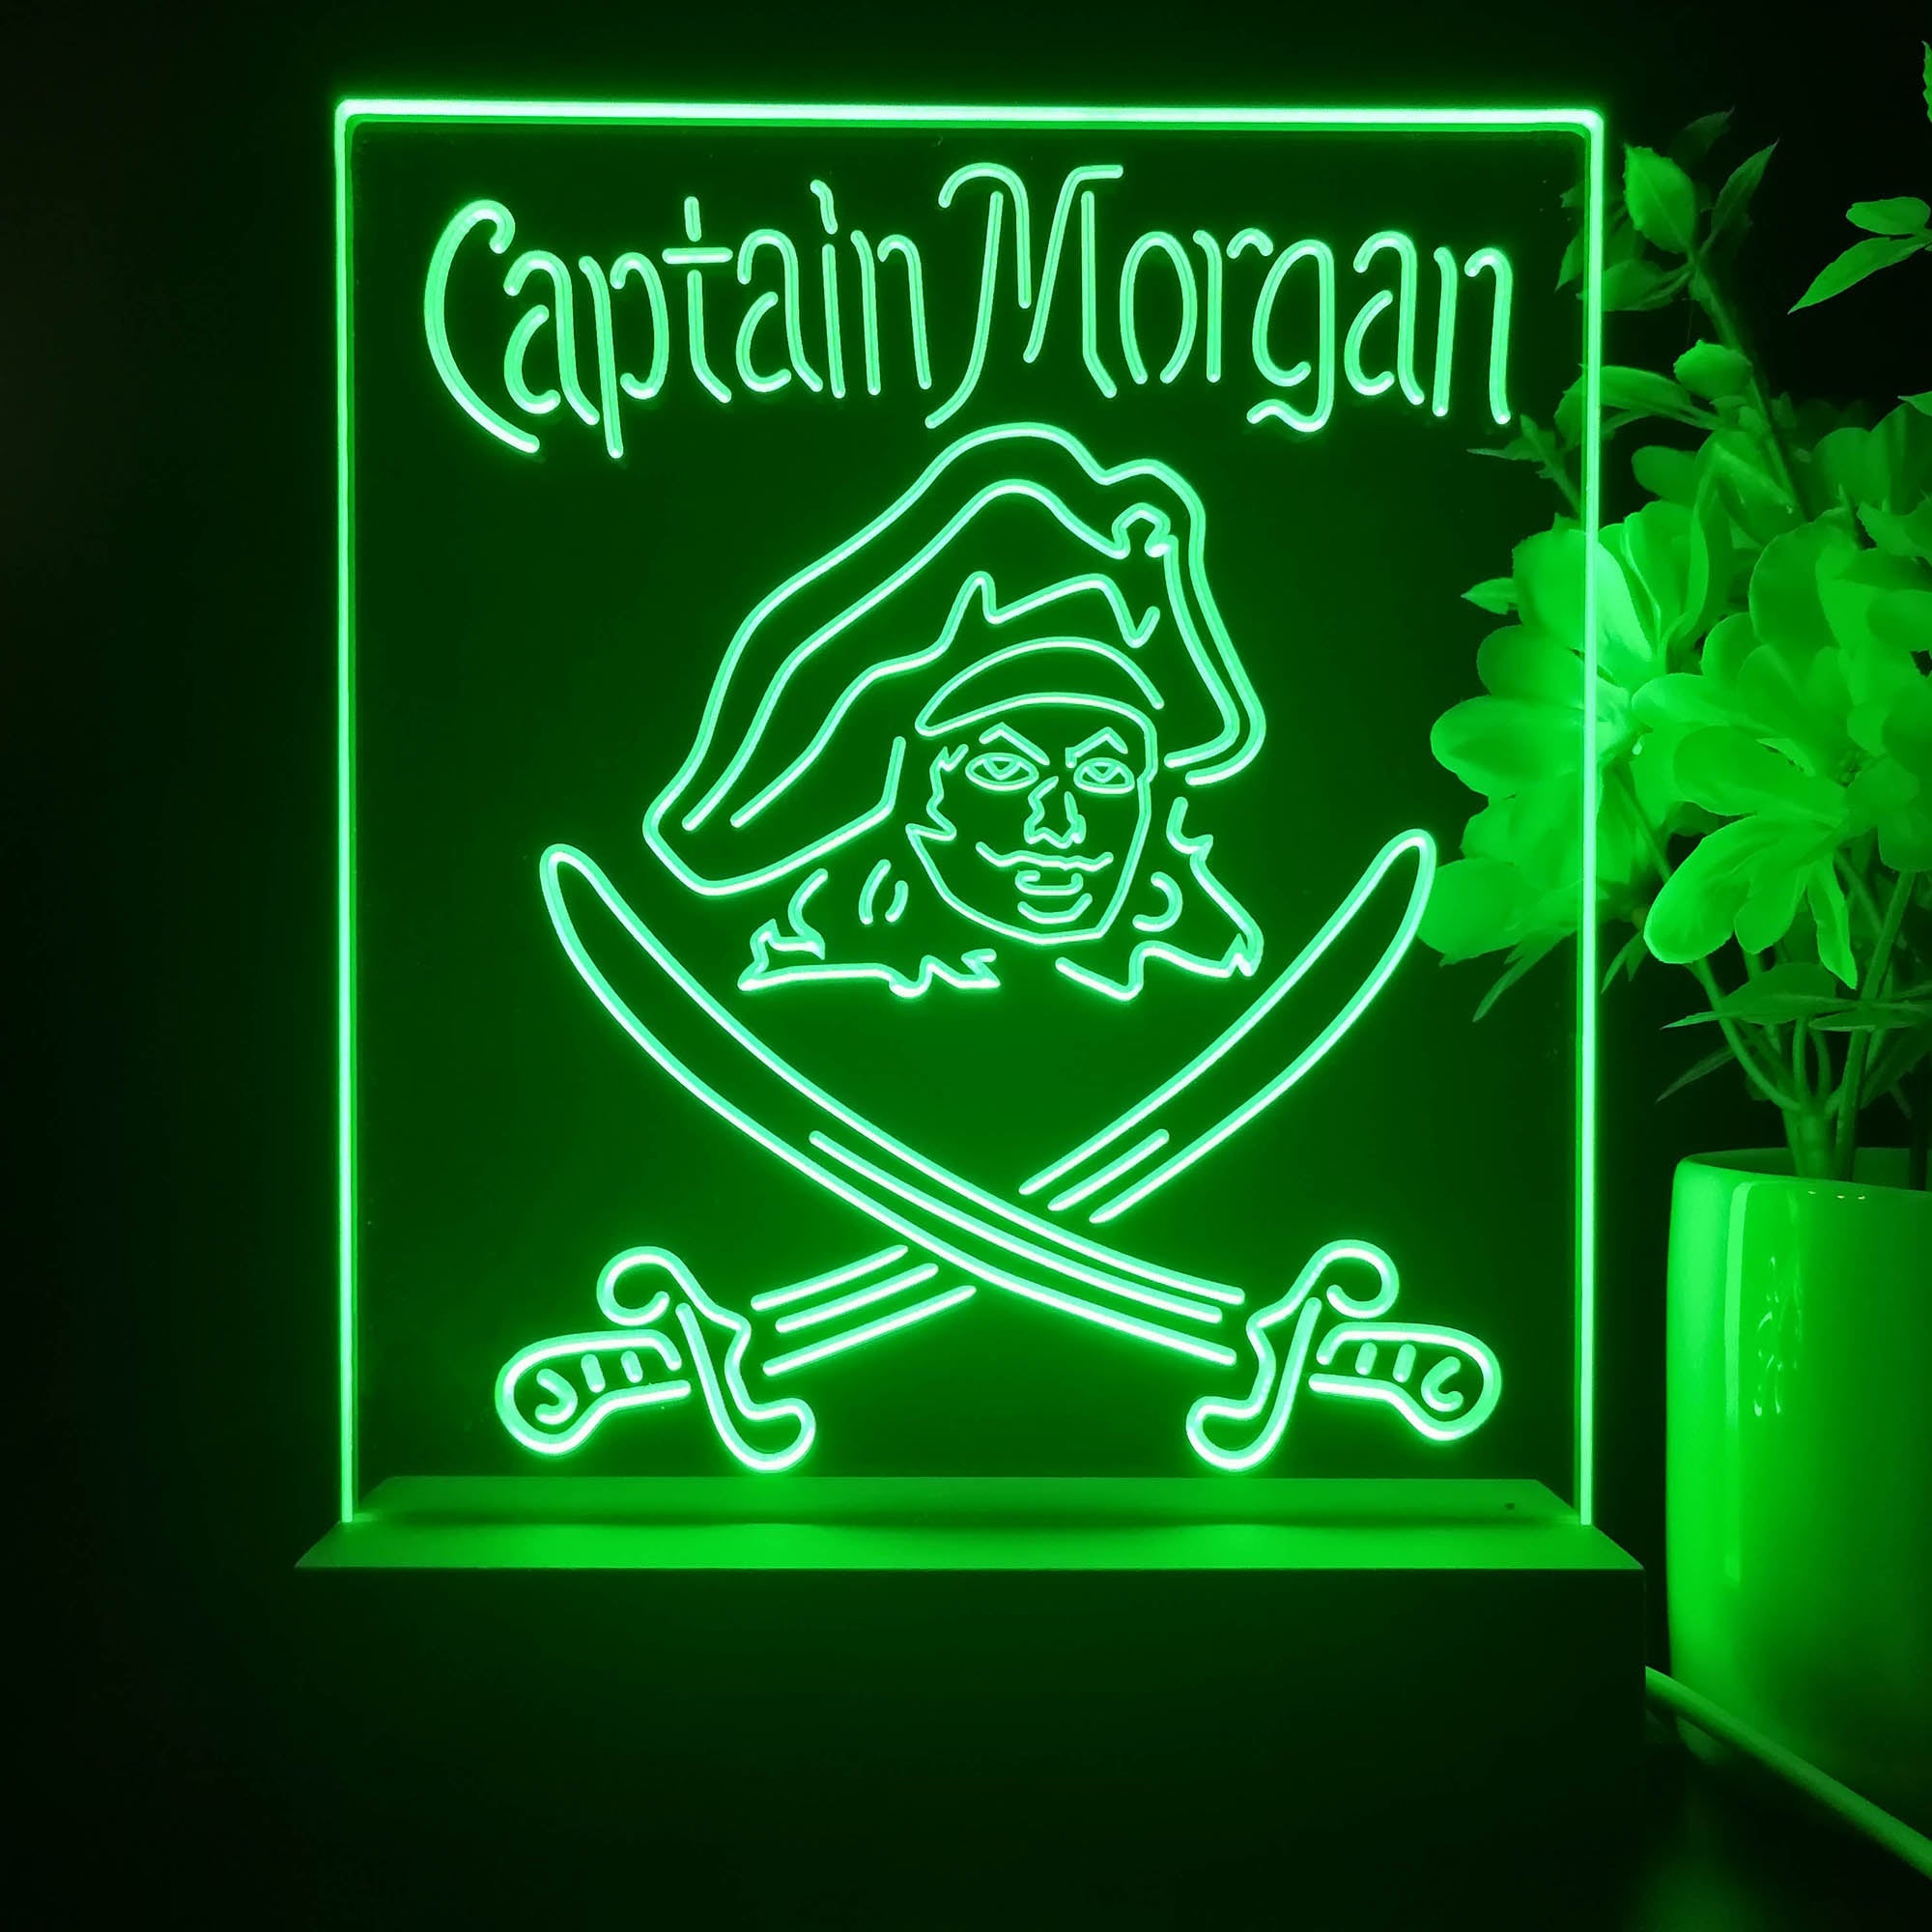 Captain Morgan Rum Bar Night Light Neon Pub Bar Lamp